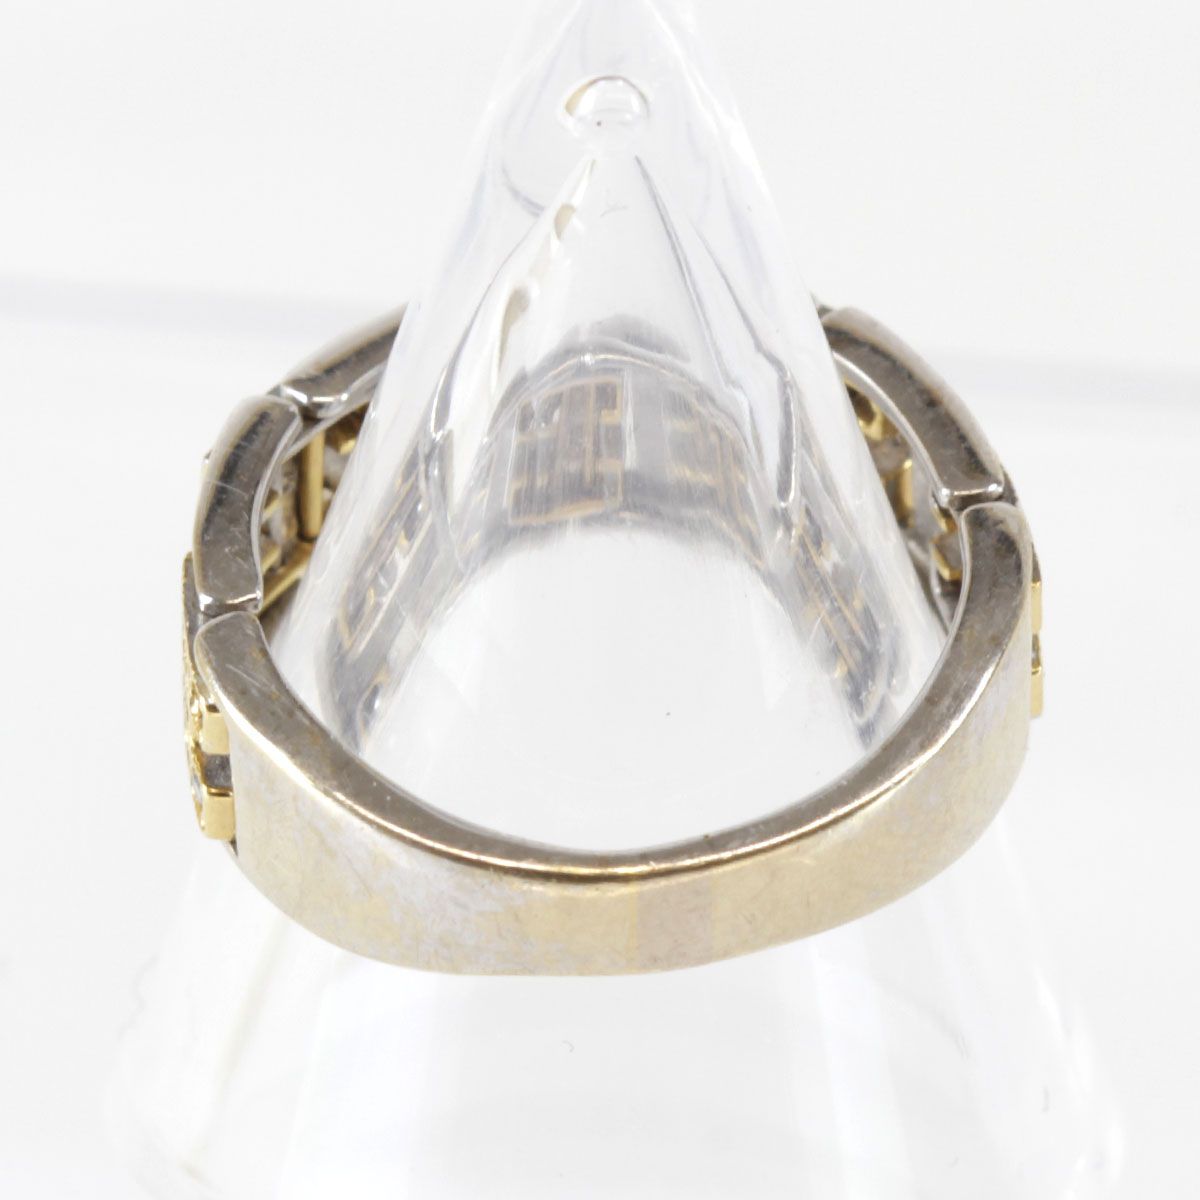 USED』 K18WG Hデザイン リング・指輪 ダイヤモンド 0.35ct 5.8g 14号 